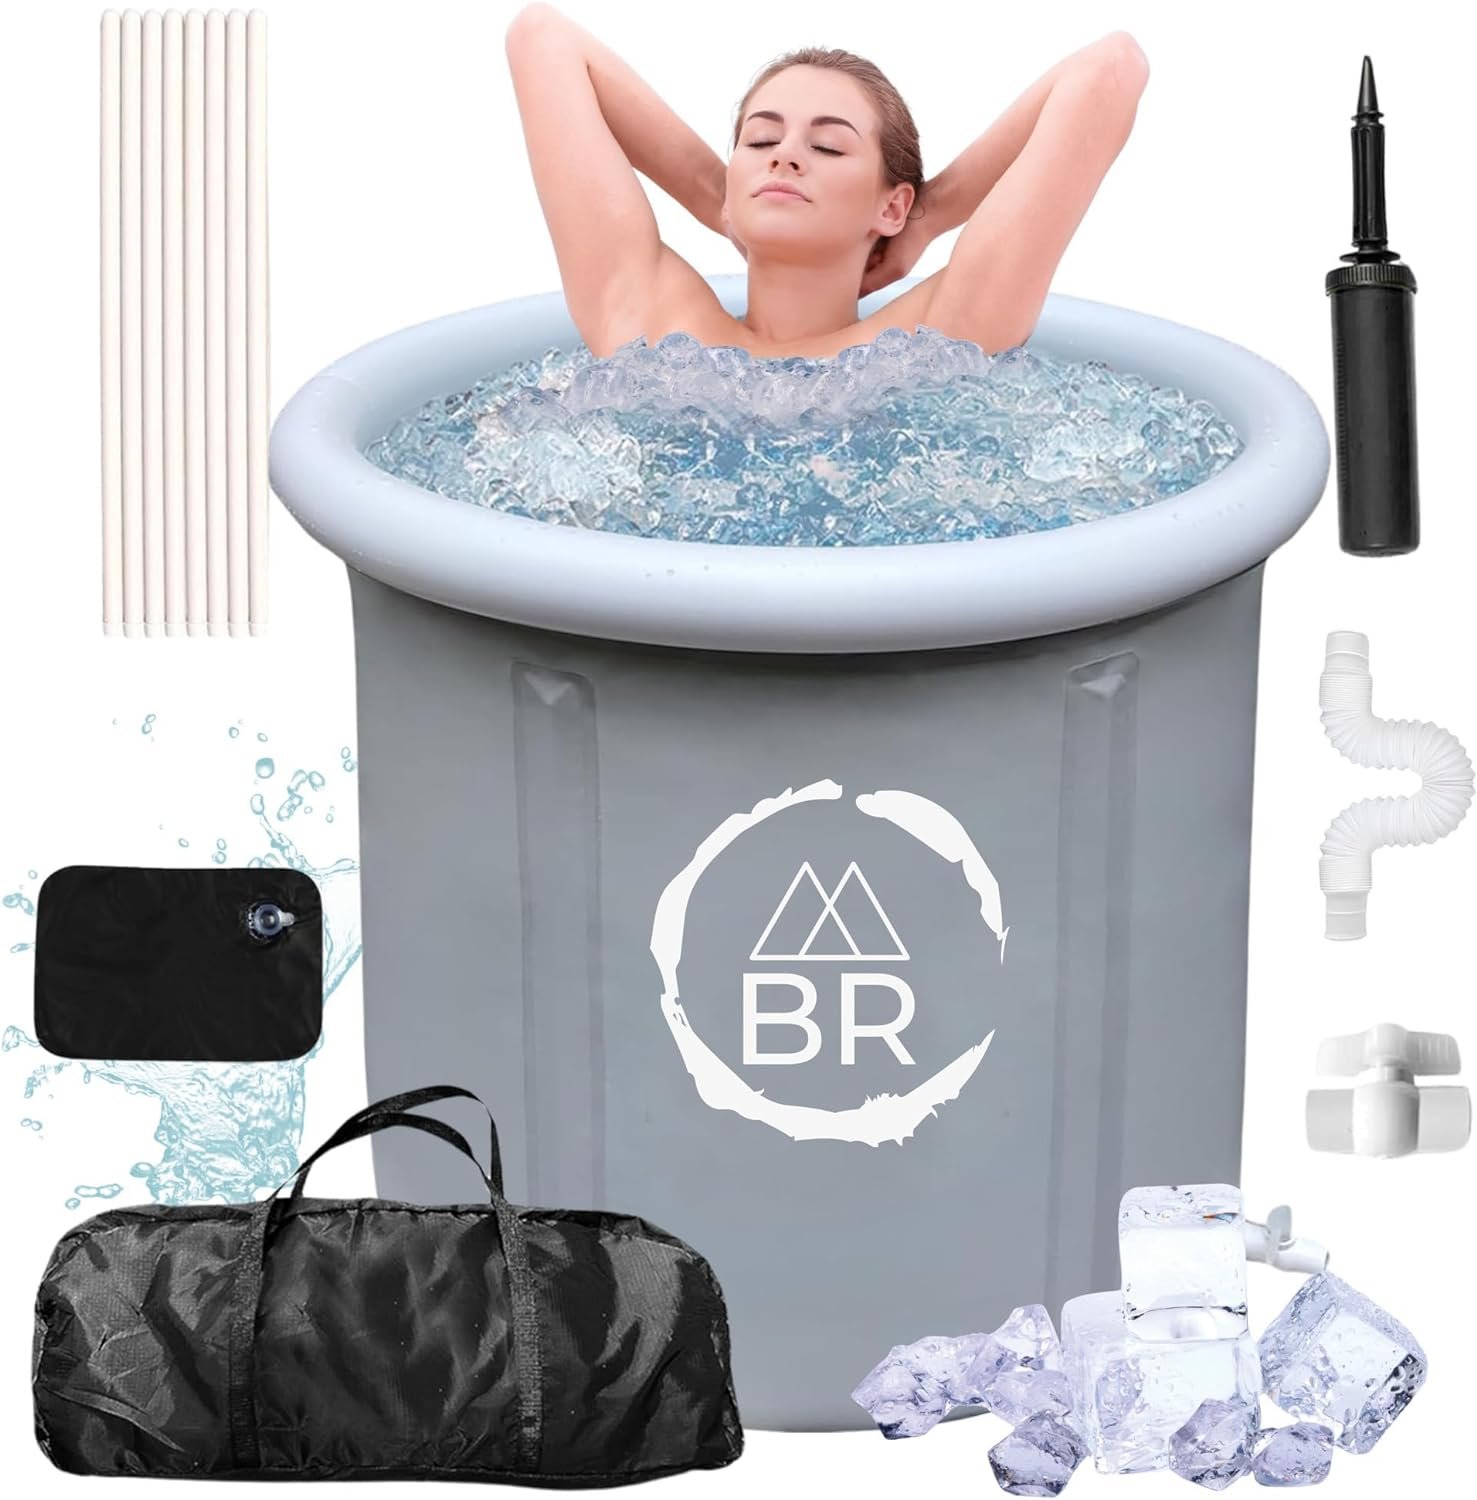 BRIOS – Ice Bath Tub Review